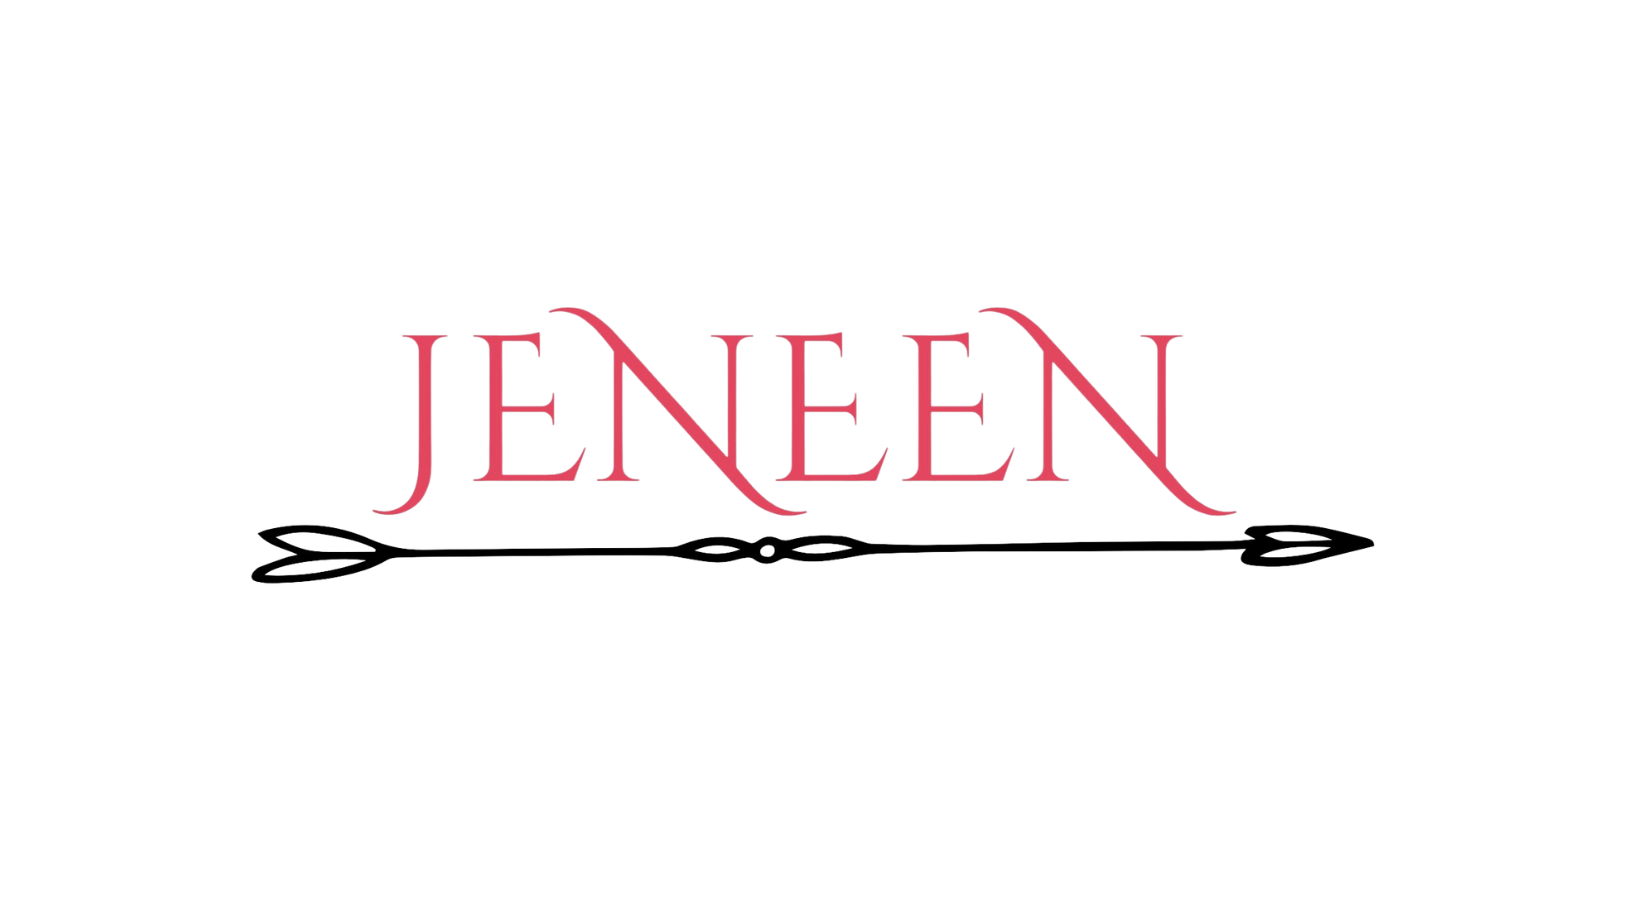 JENEEN